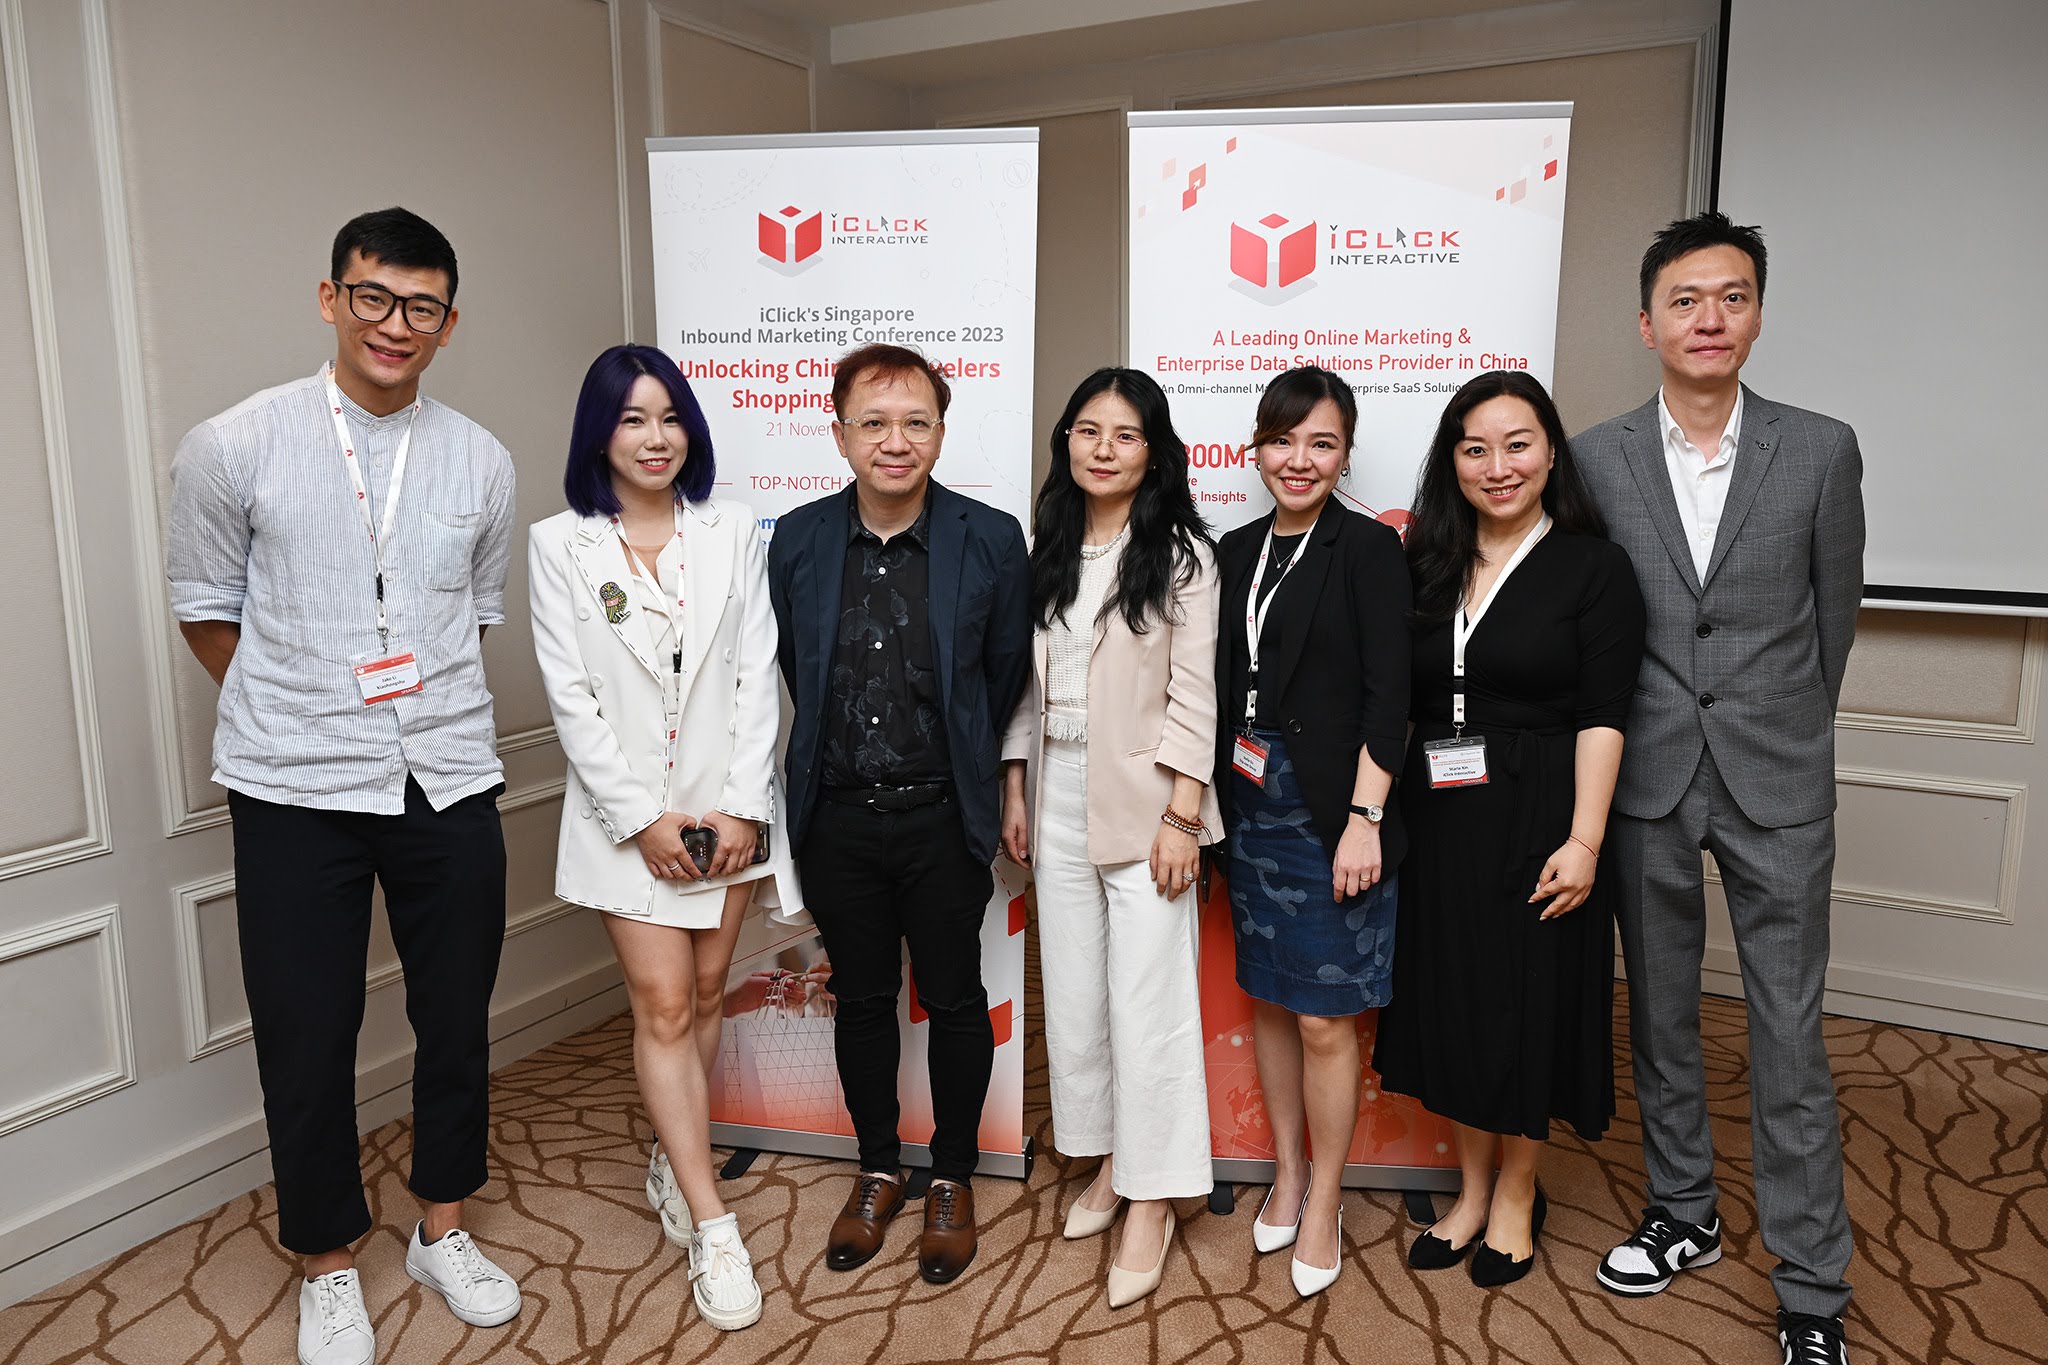 iClick's Singapore Inbound Marketing Conference 2023: Unlocking Chinese Travelers' Shopping Behavior